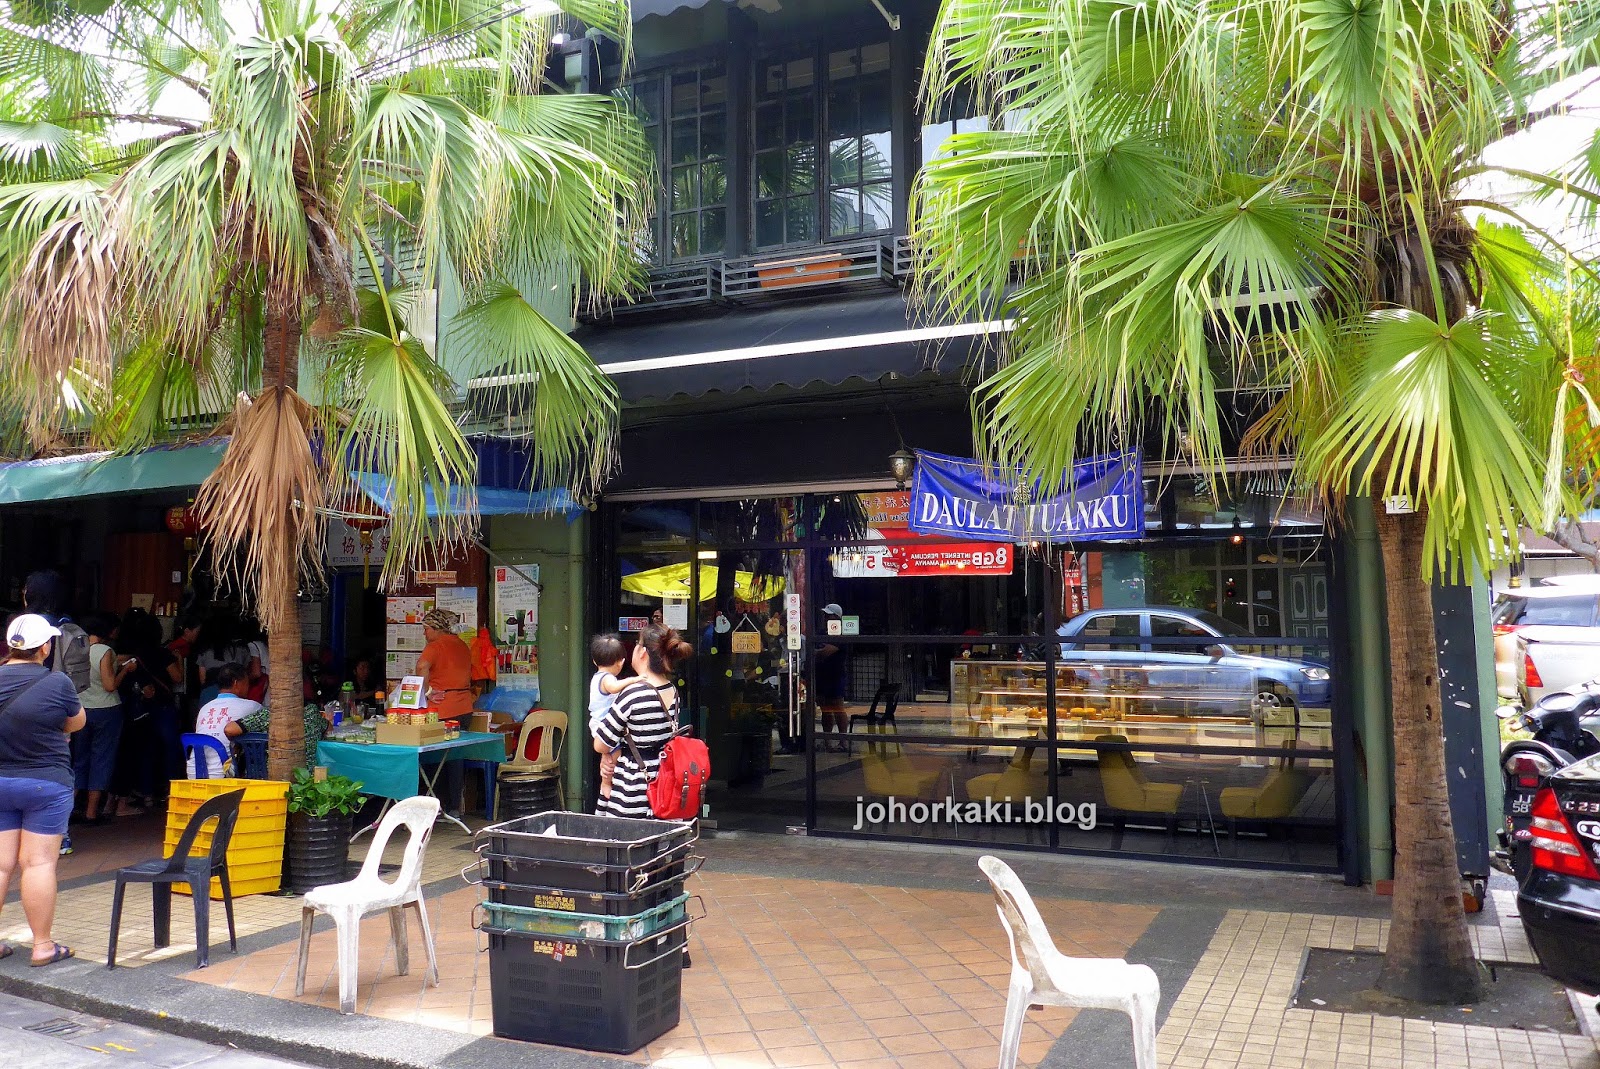 2017 Walking Guide to Good Food & Cafes near Johor JB 